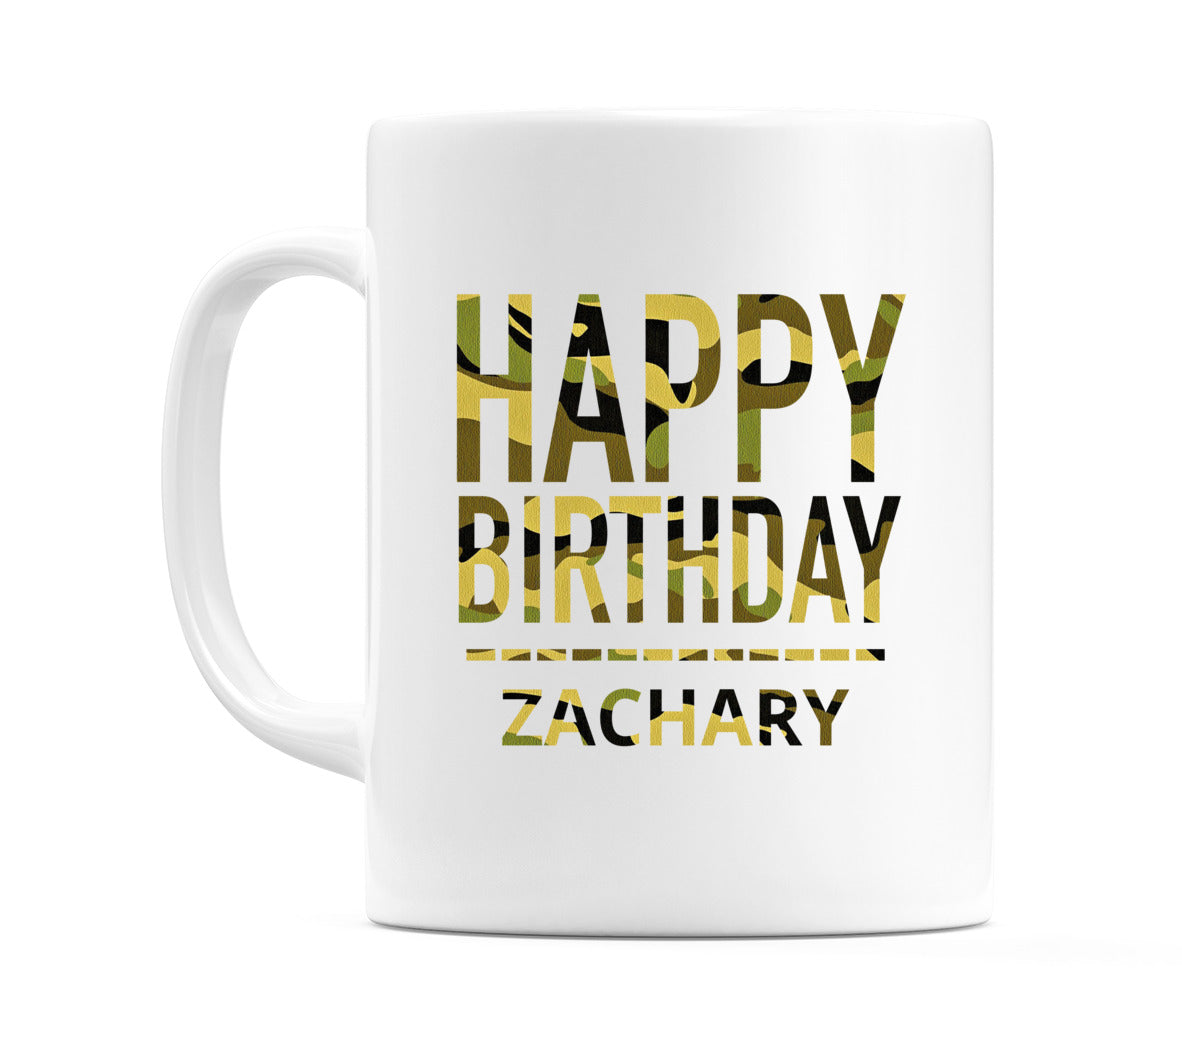 Happy Birthday Zachary (Camo) Mug Cup by WeDoMugs